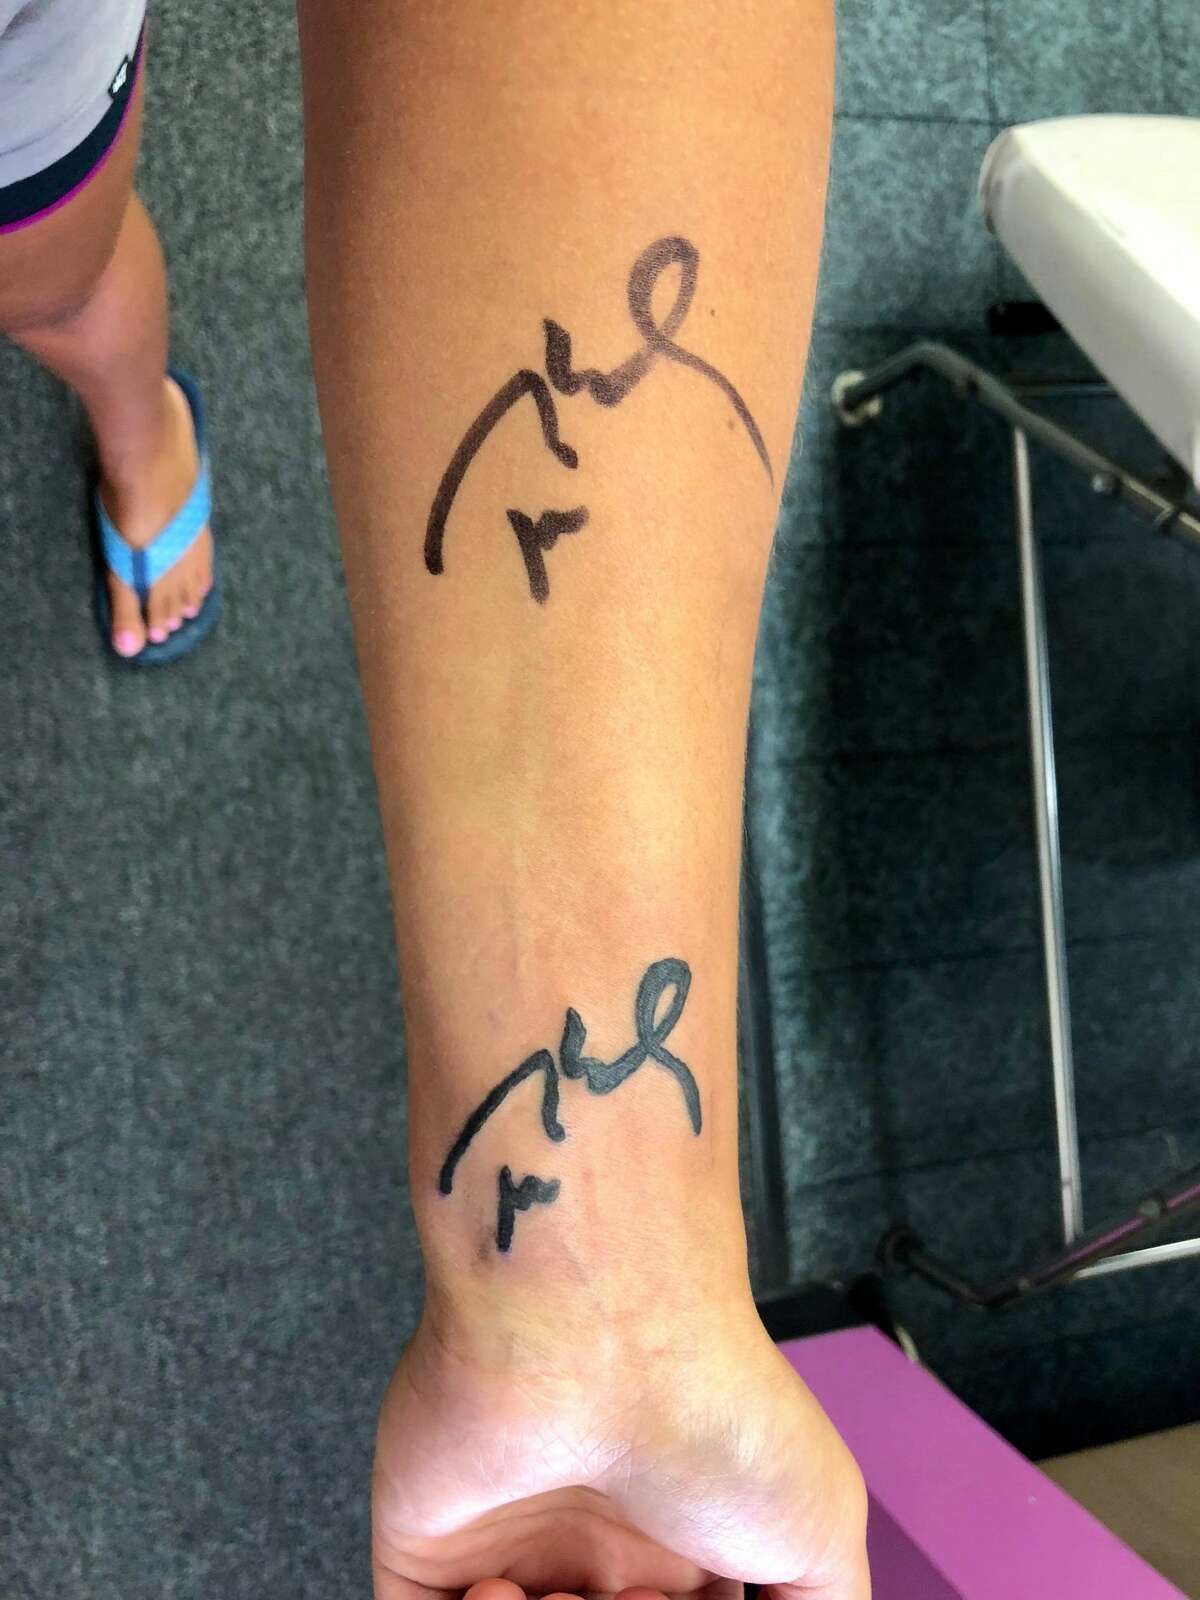 Startford resident Megan Uhrynowski, 19, got a tattoo of Tom Brady's signature on her arm. The original autograph is on her forearm; the tattoo is on her wrist.